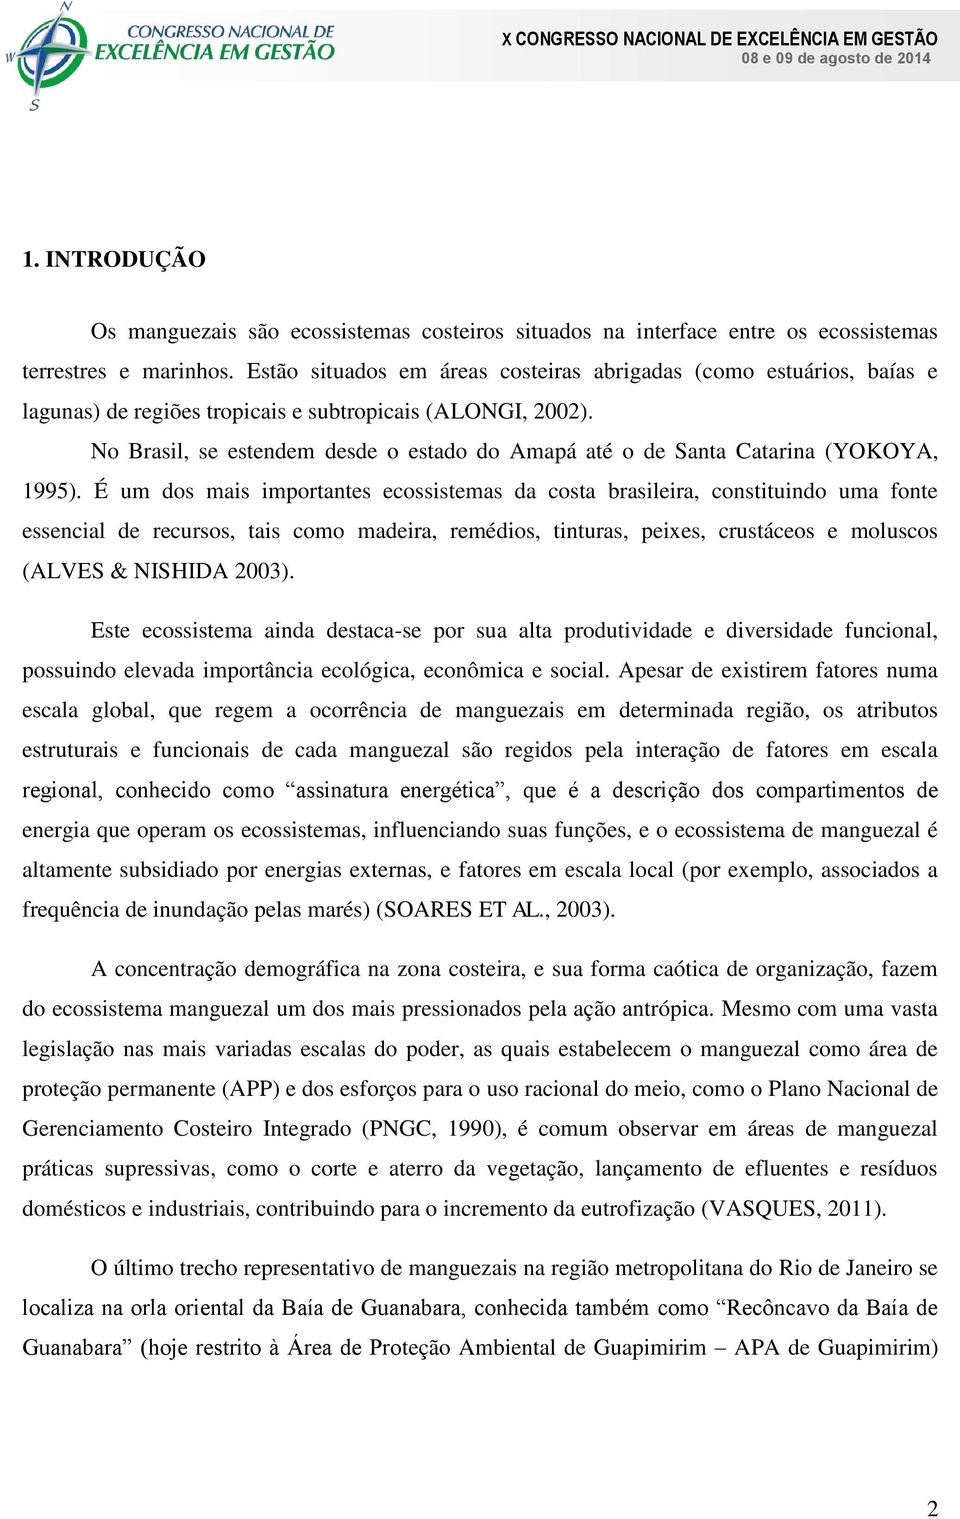 No Brasil, se estendem desde o estado do Amapá até o de Santa Catarina (YOKOYA, 1995).